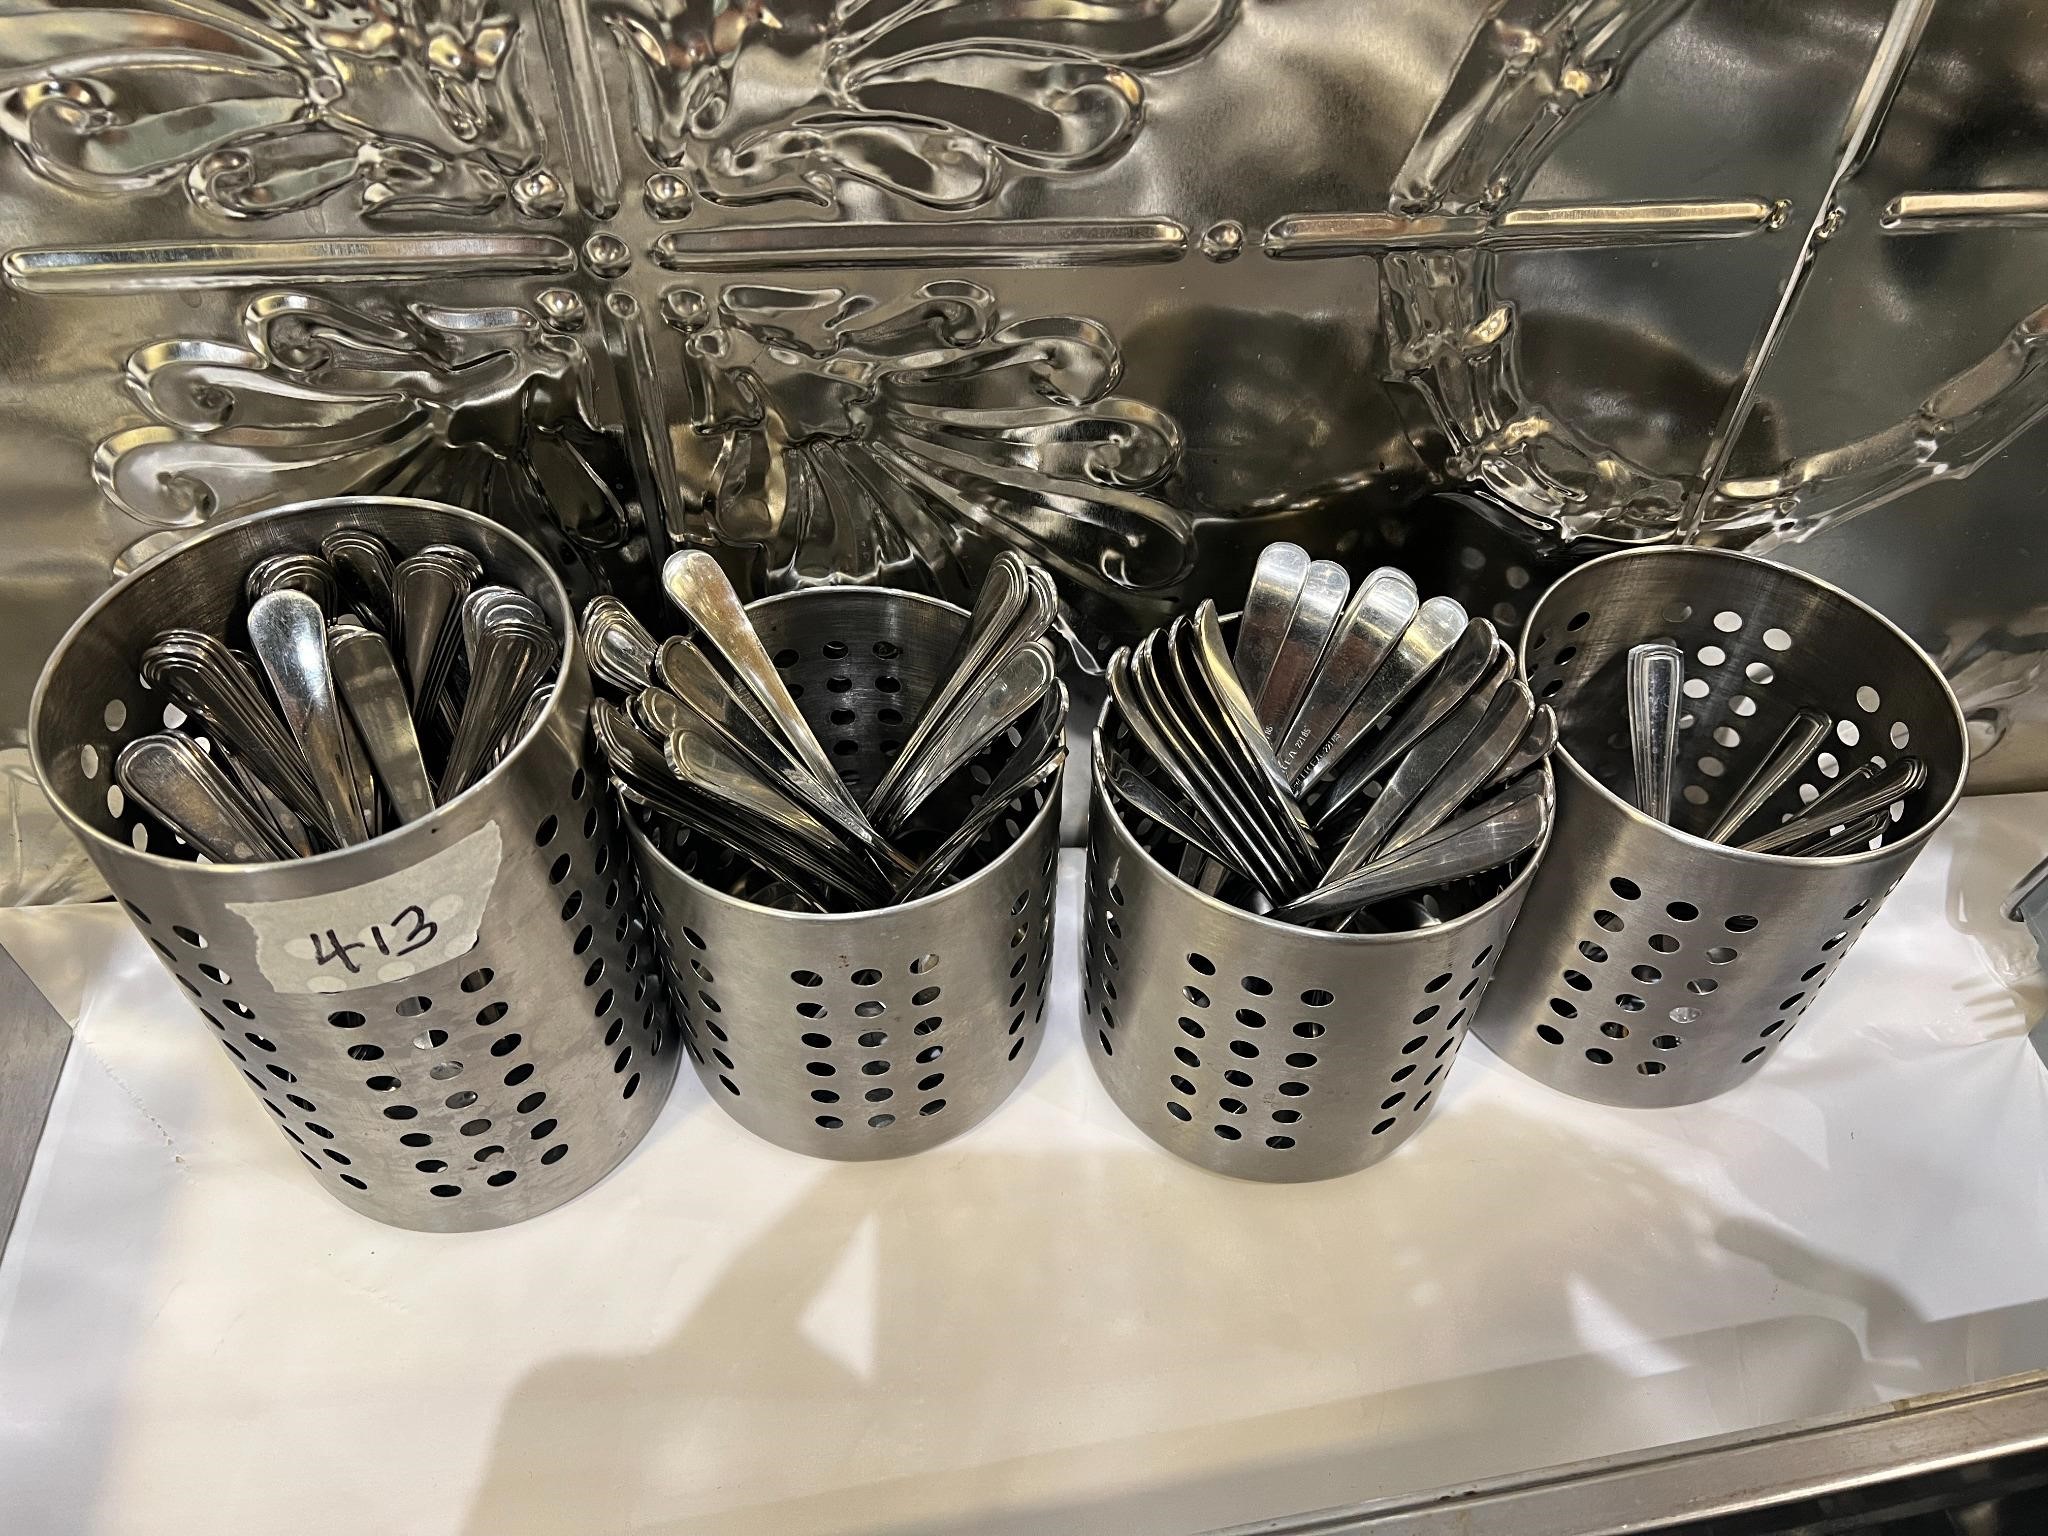 4 Steel Cutlery Bins with Spoons